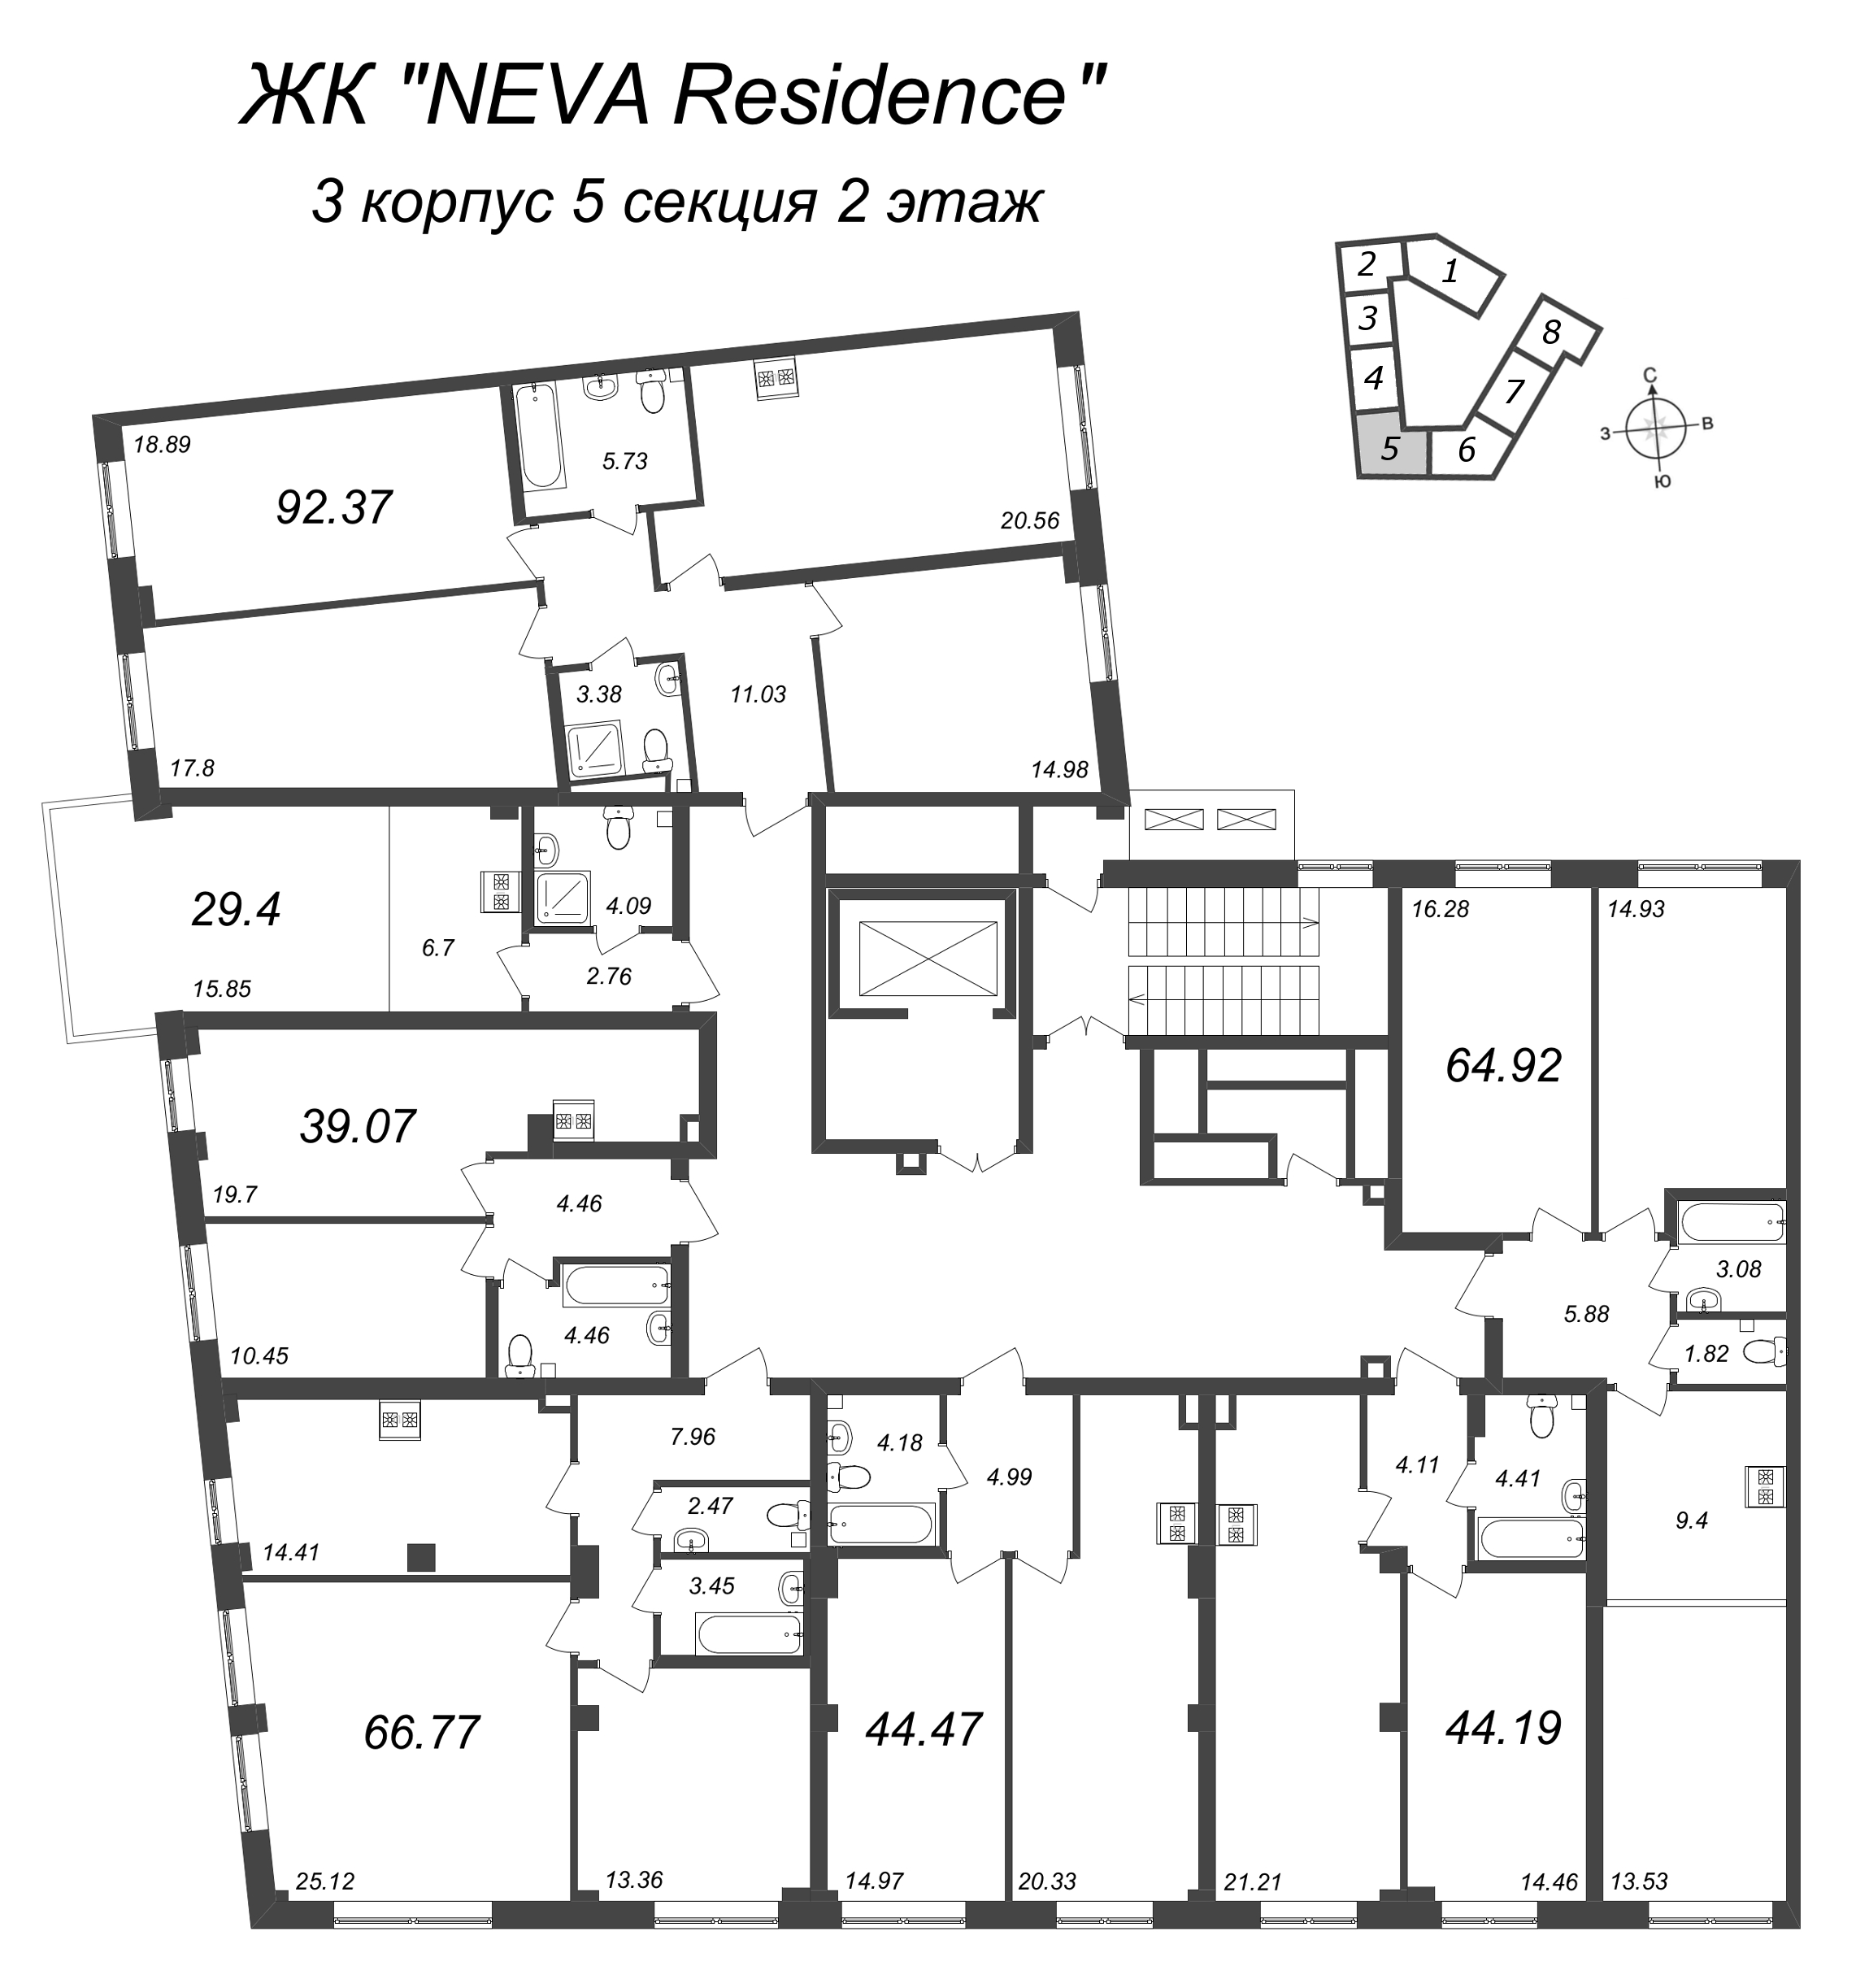 3-комнатная (Евро) квартира, 64.92 м² - планировка этажа